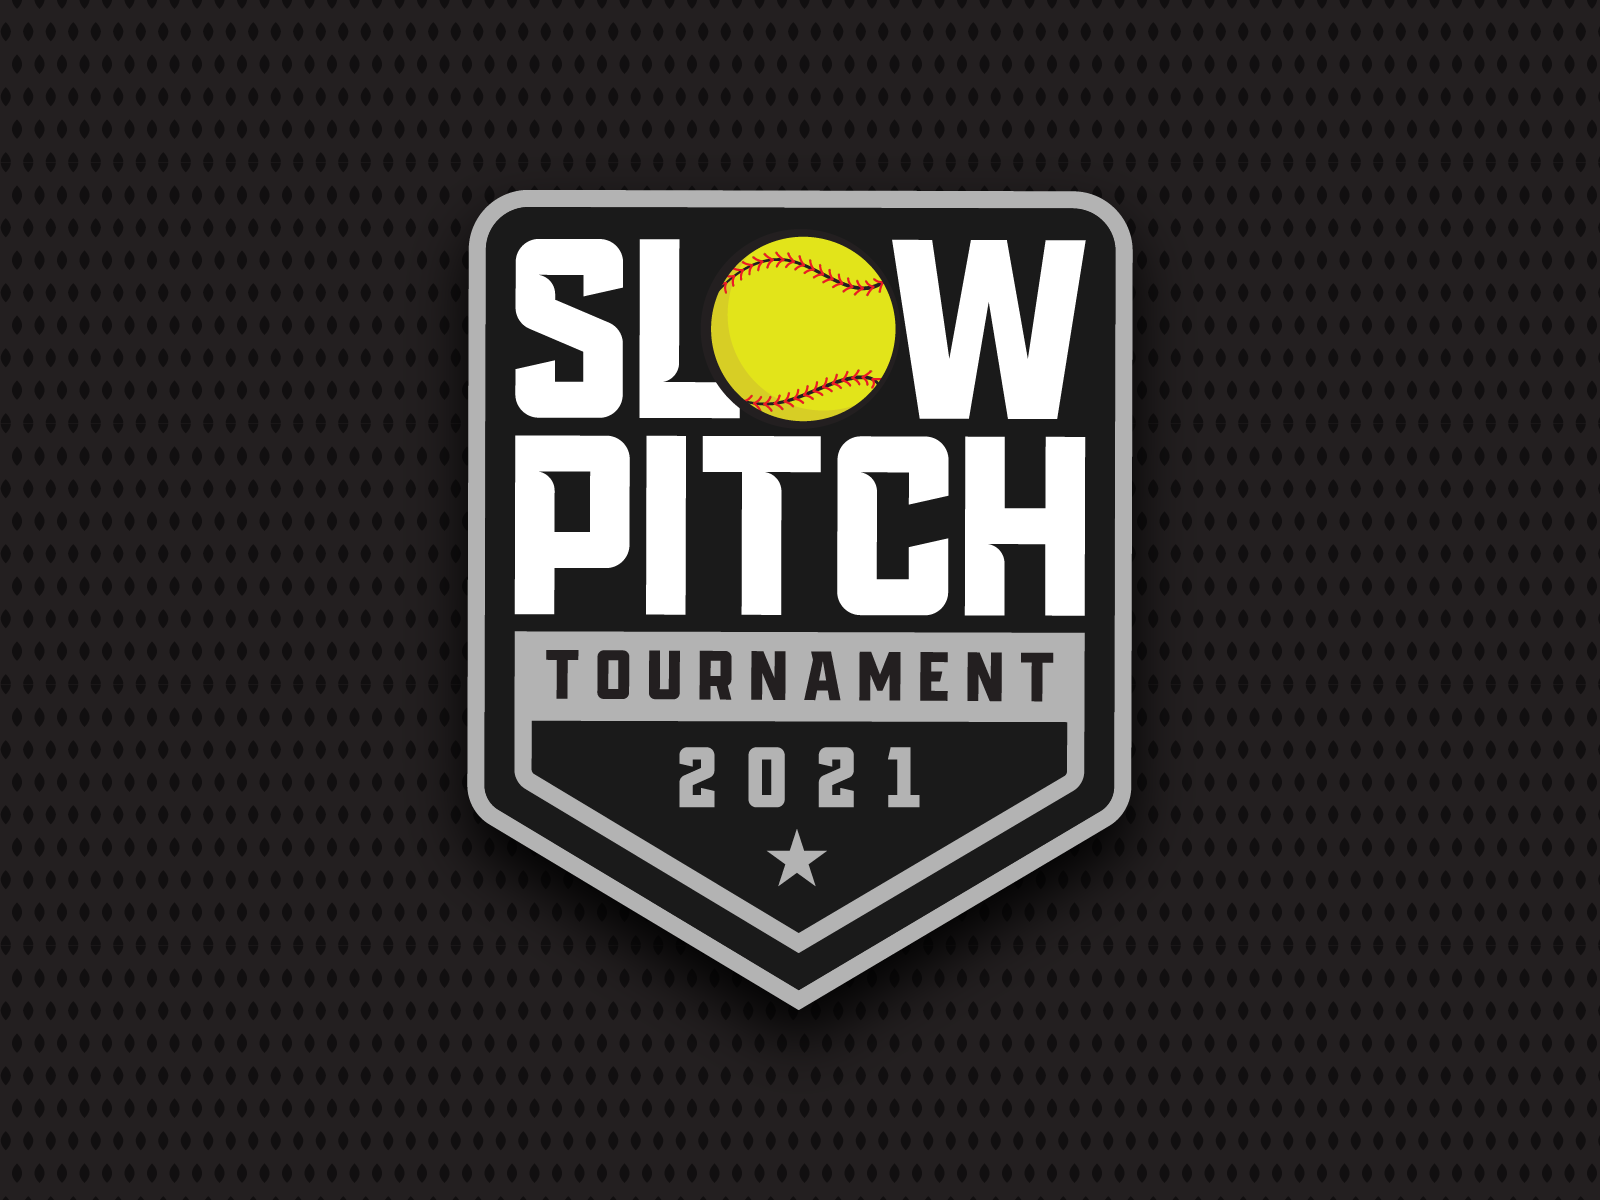 Slow Pitch Tournament 2021 by Jamie Shields on Dribbble